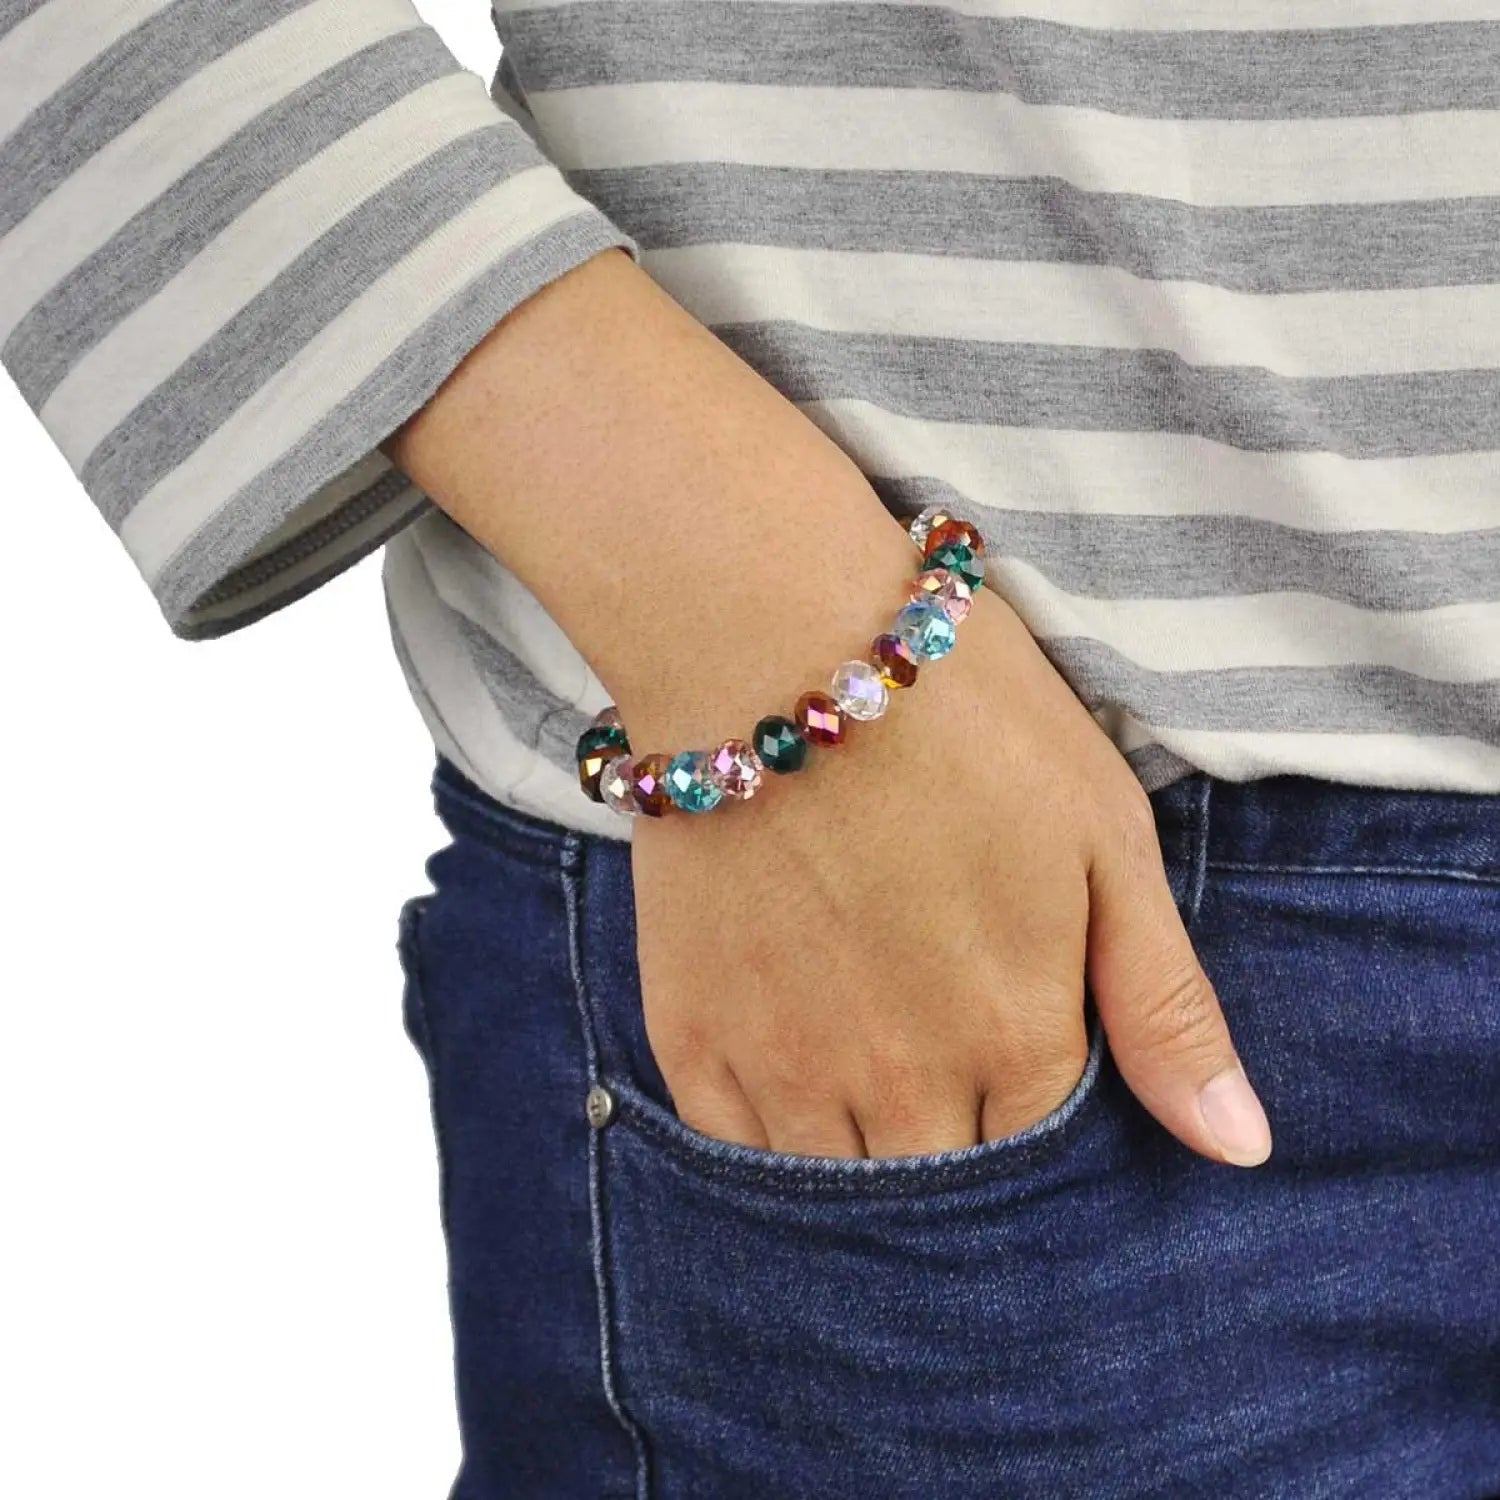 Colorful beads stretchy bracelet with metallic beads - Girls’ wristband jewellery